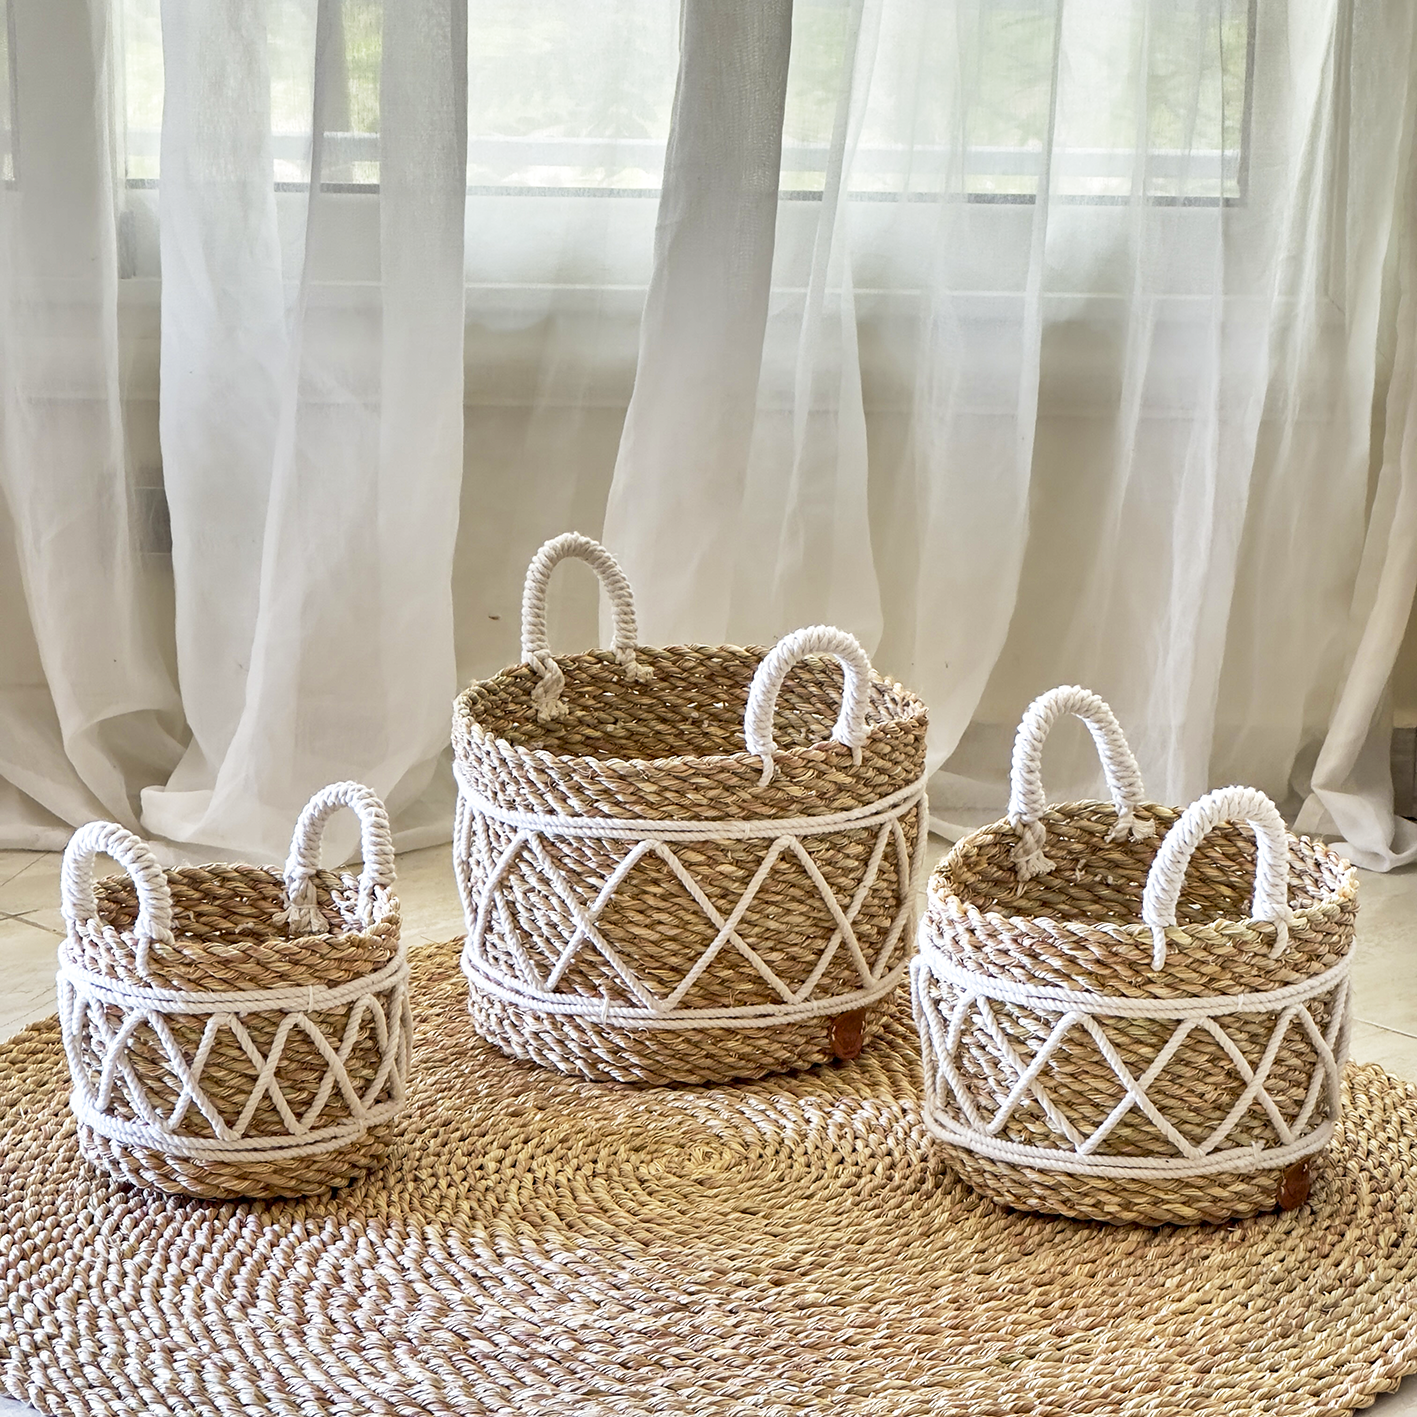 Halfa basket with cotton ropes. سلة حلفا مع حبال قطن